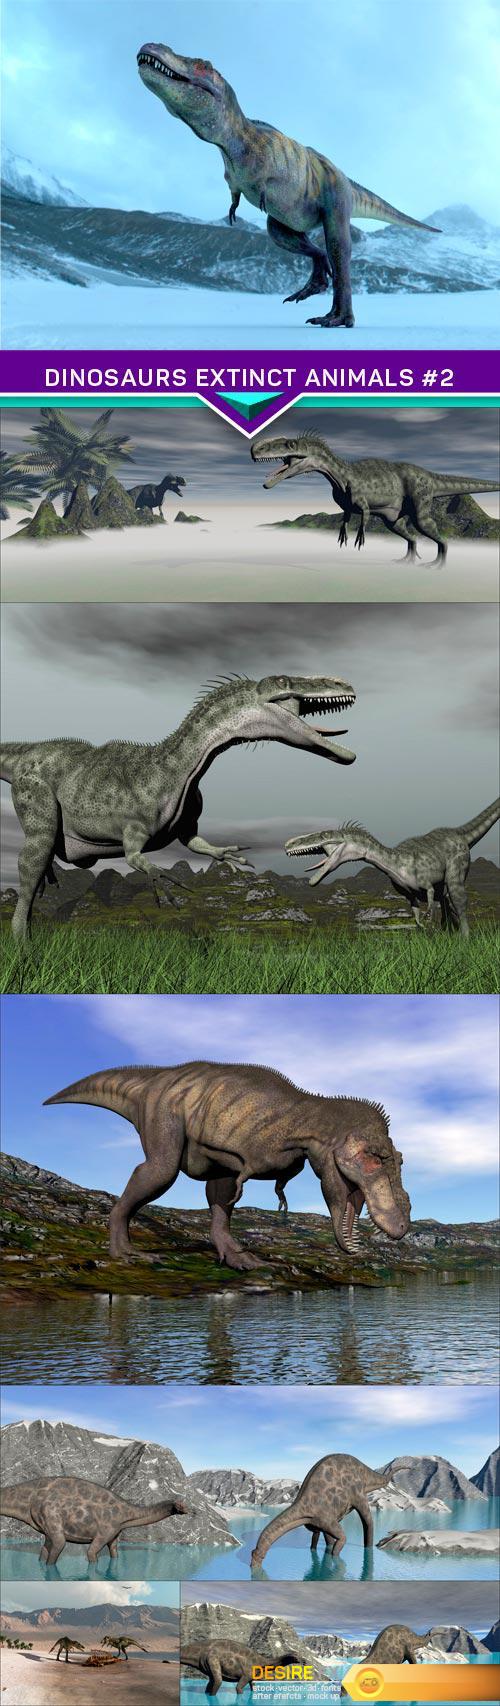 Dinosaurs extinct animals #2 7X JPEG